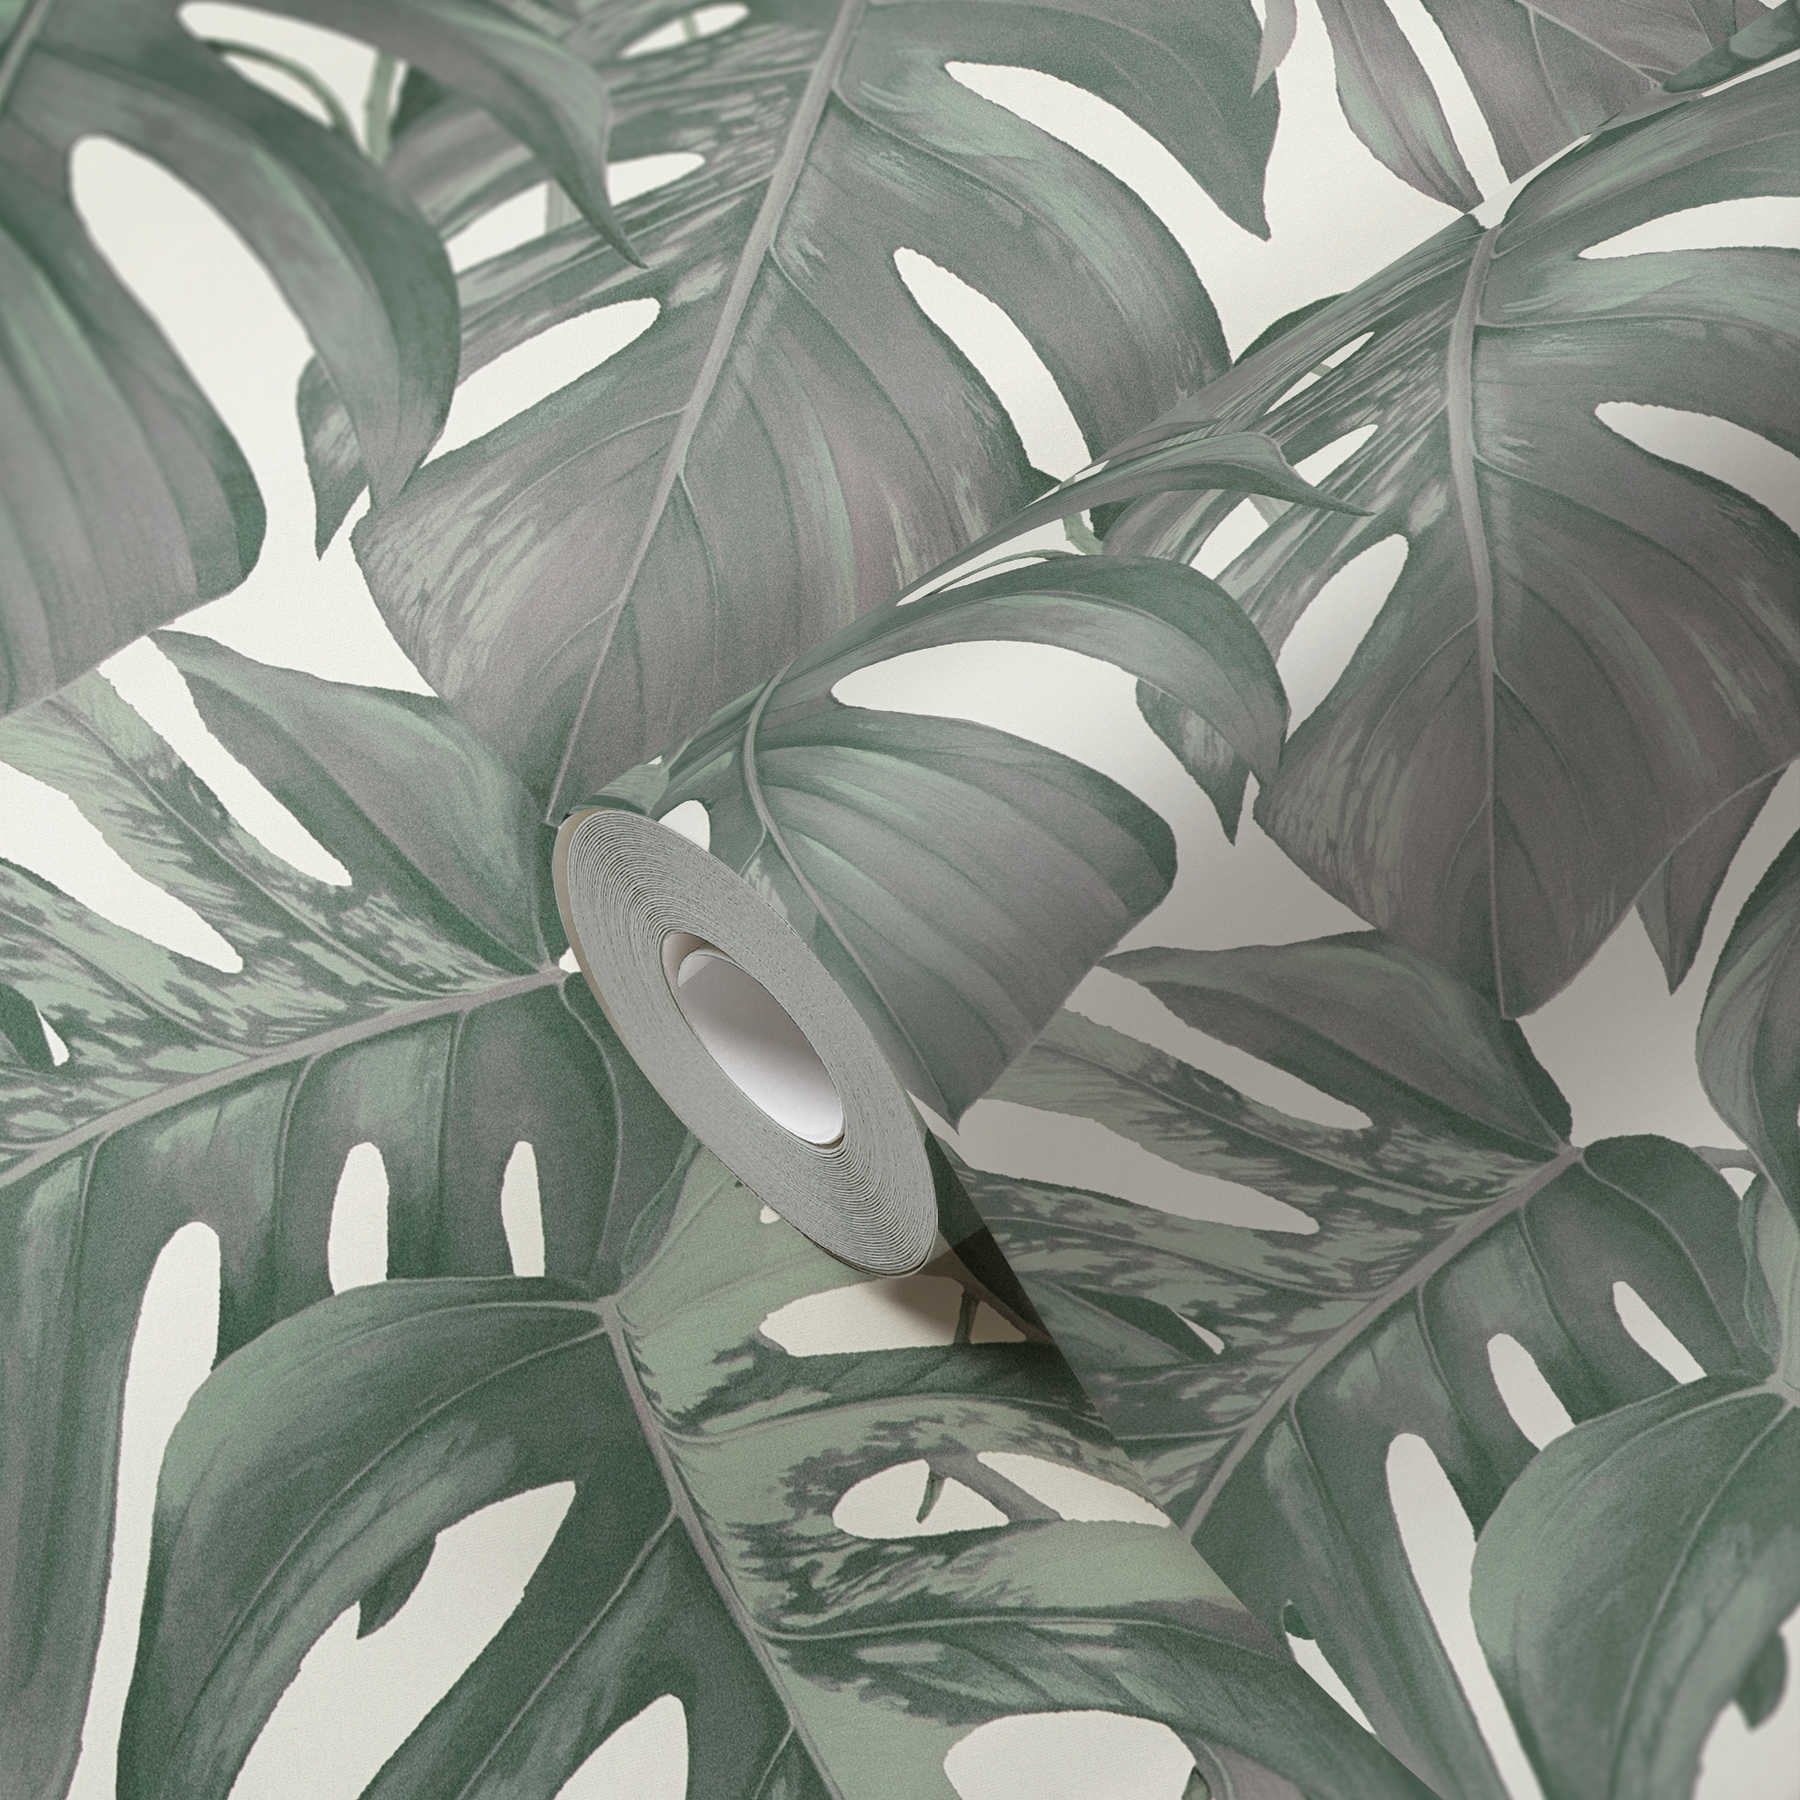             Leaves wallpaper tropical monstera pattern - green, white
        